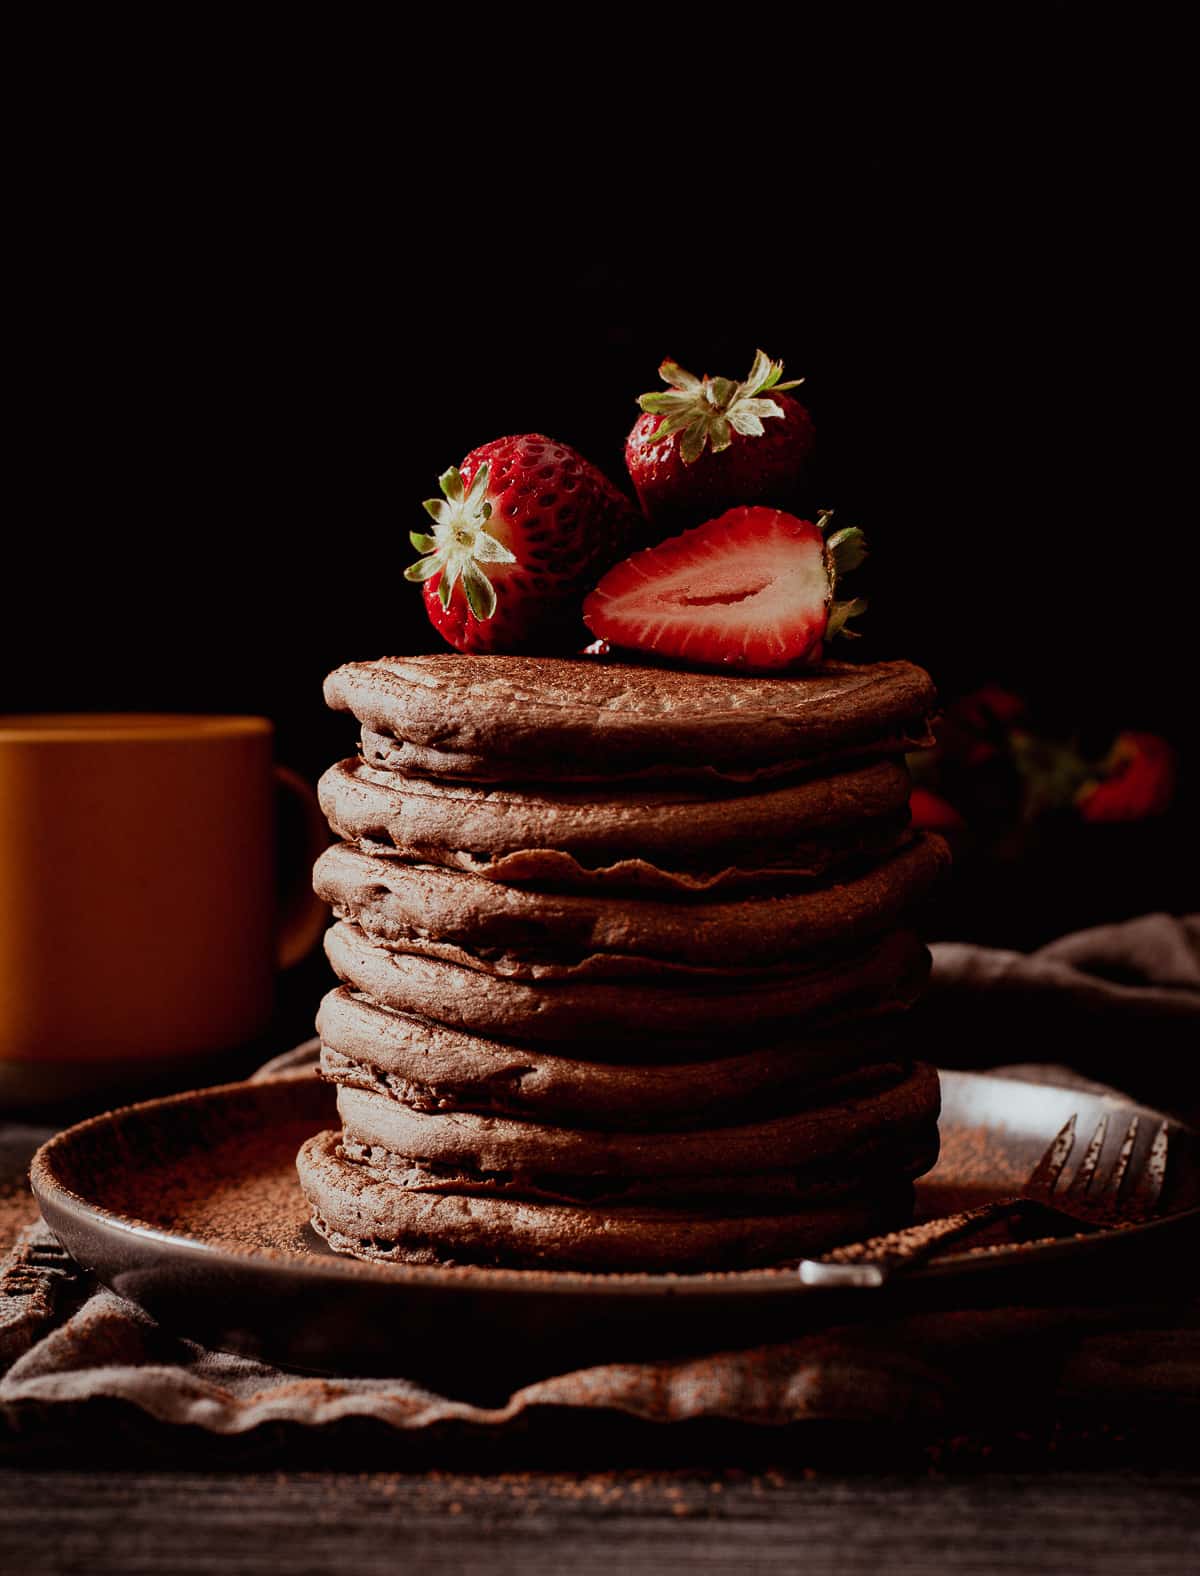 vegan chocolate pancakes stacked with strawberries